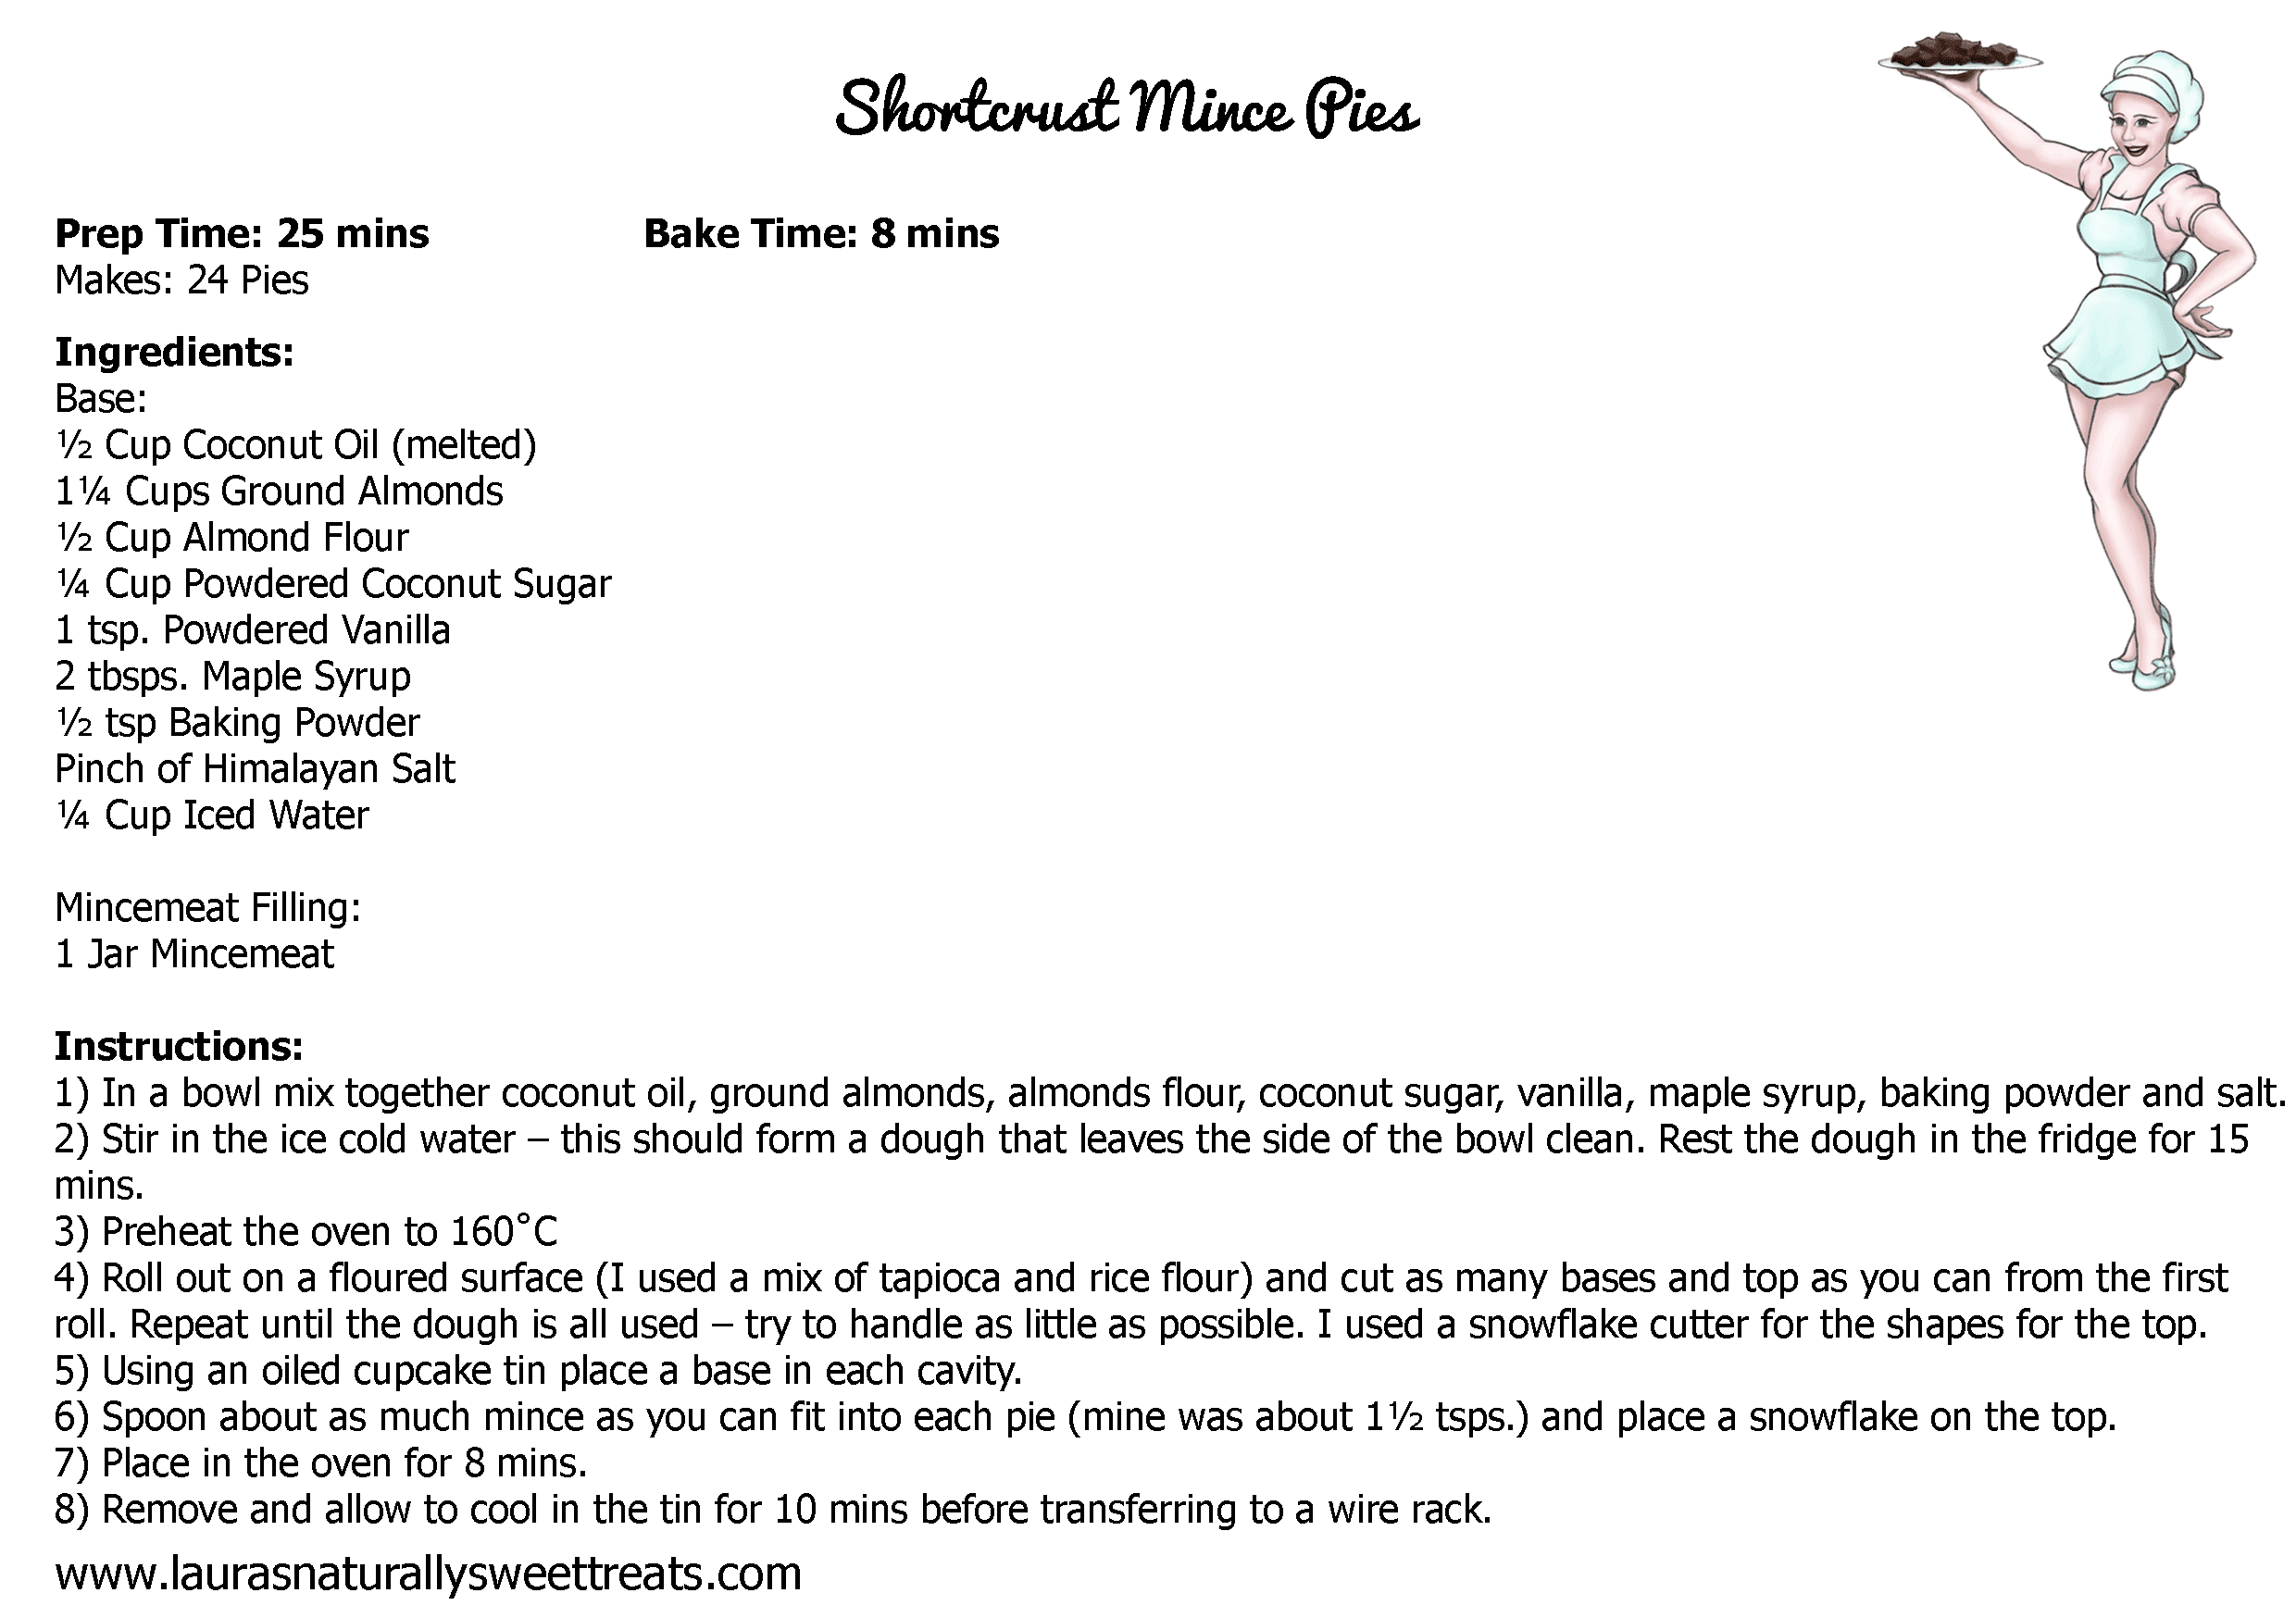 shortcrust-mince-pies-recipe-card